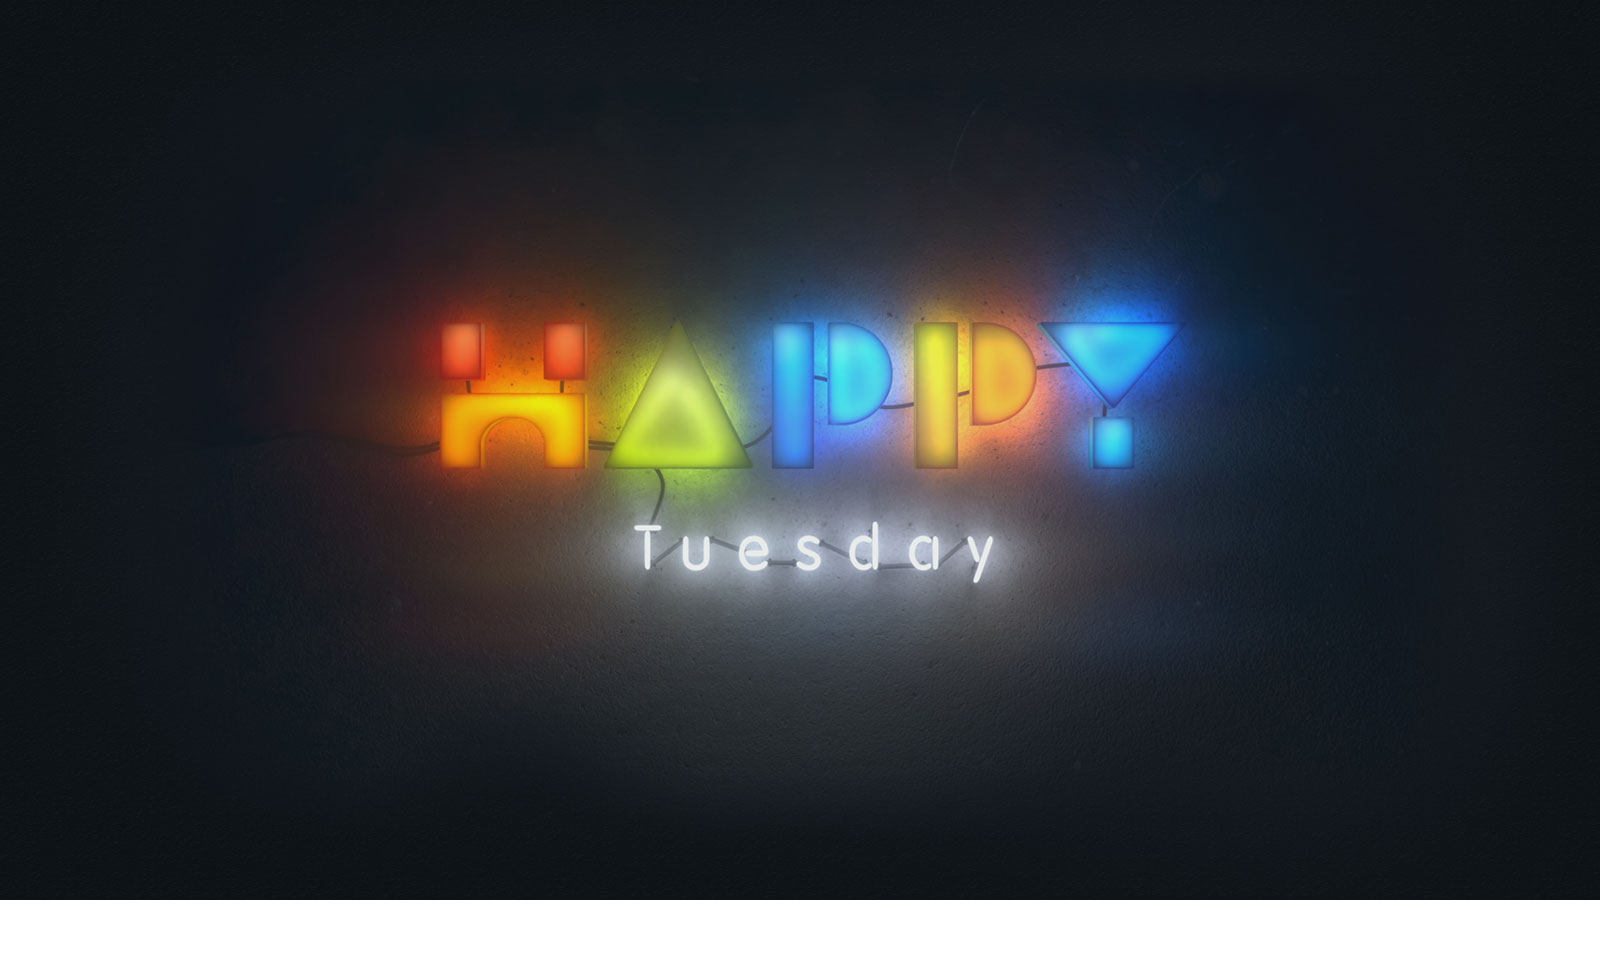 (c) Happy-tuesday.com